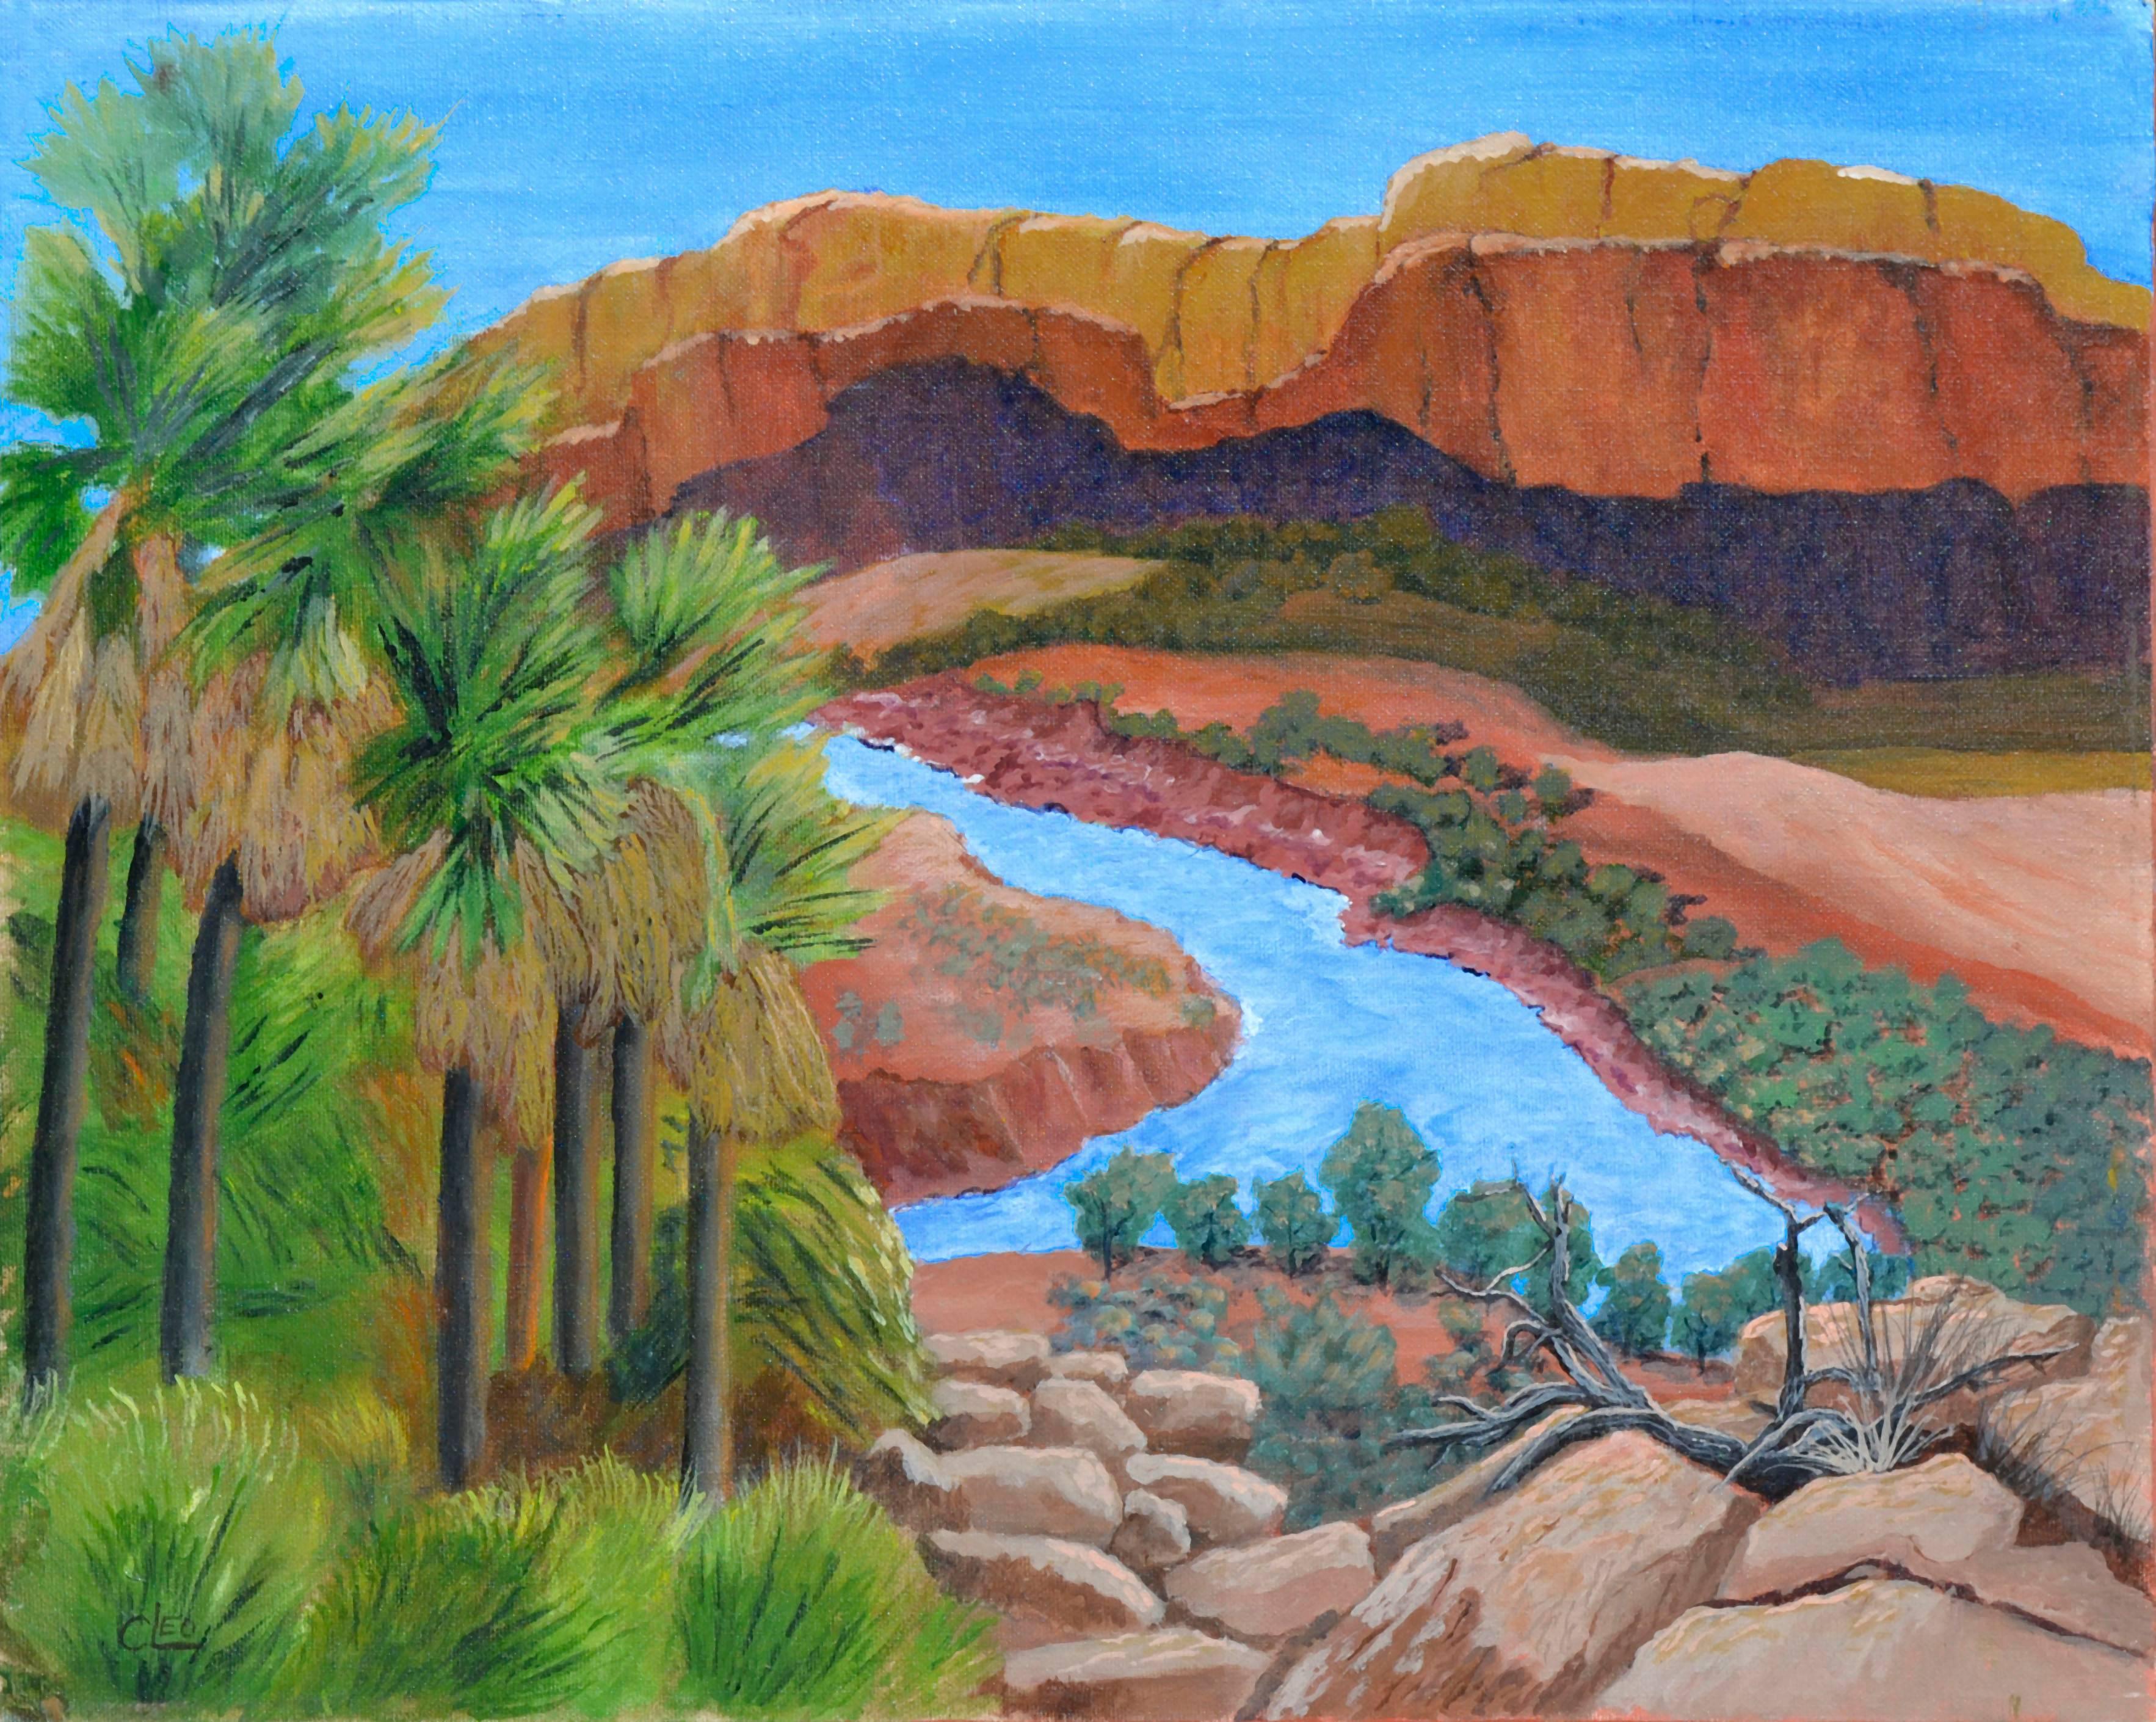 Clementine Cote Landscape Painting - Canyon and River - Desert Landscape 